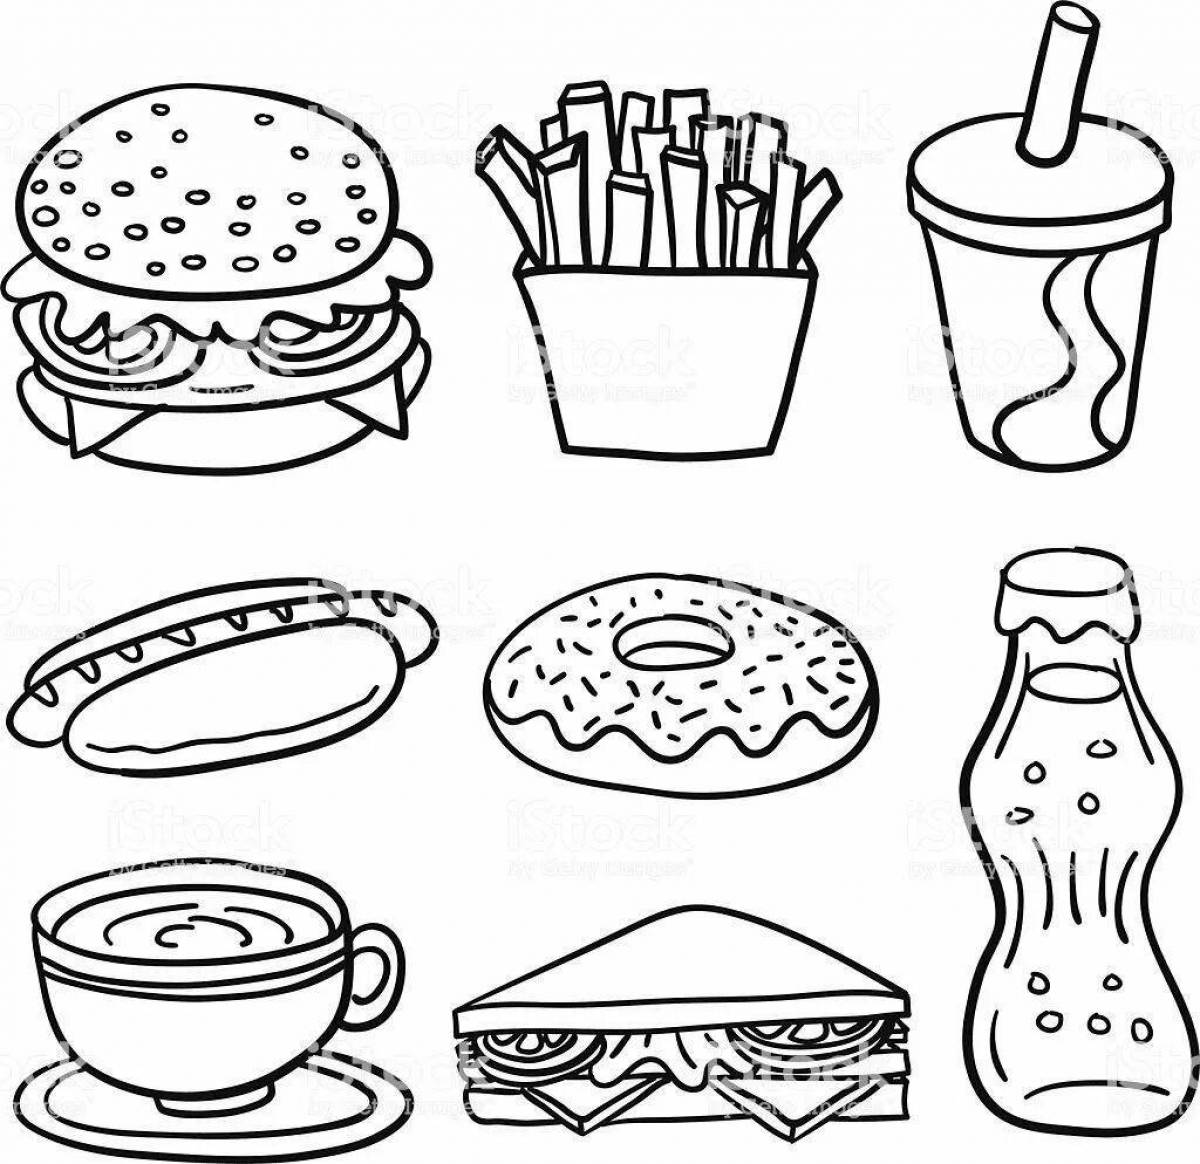 Fun foodstuffs coloring page для детей 6-7 лет